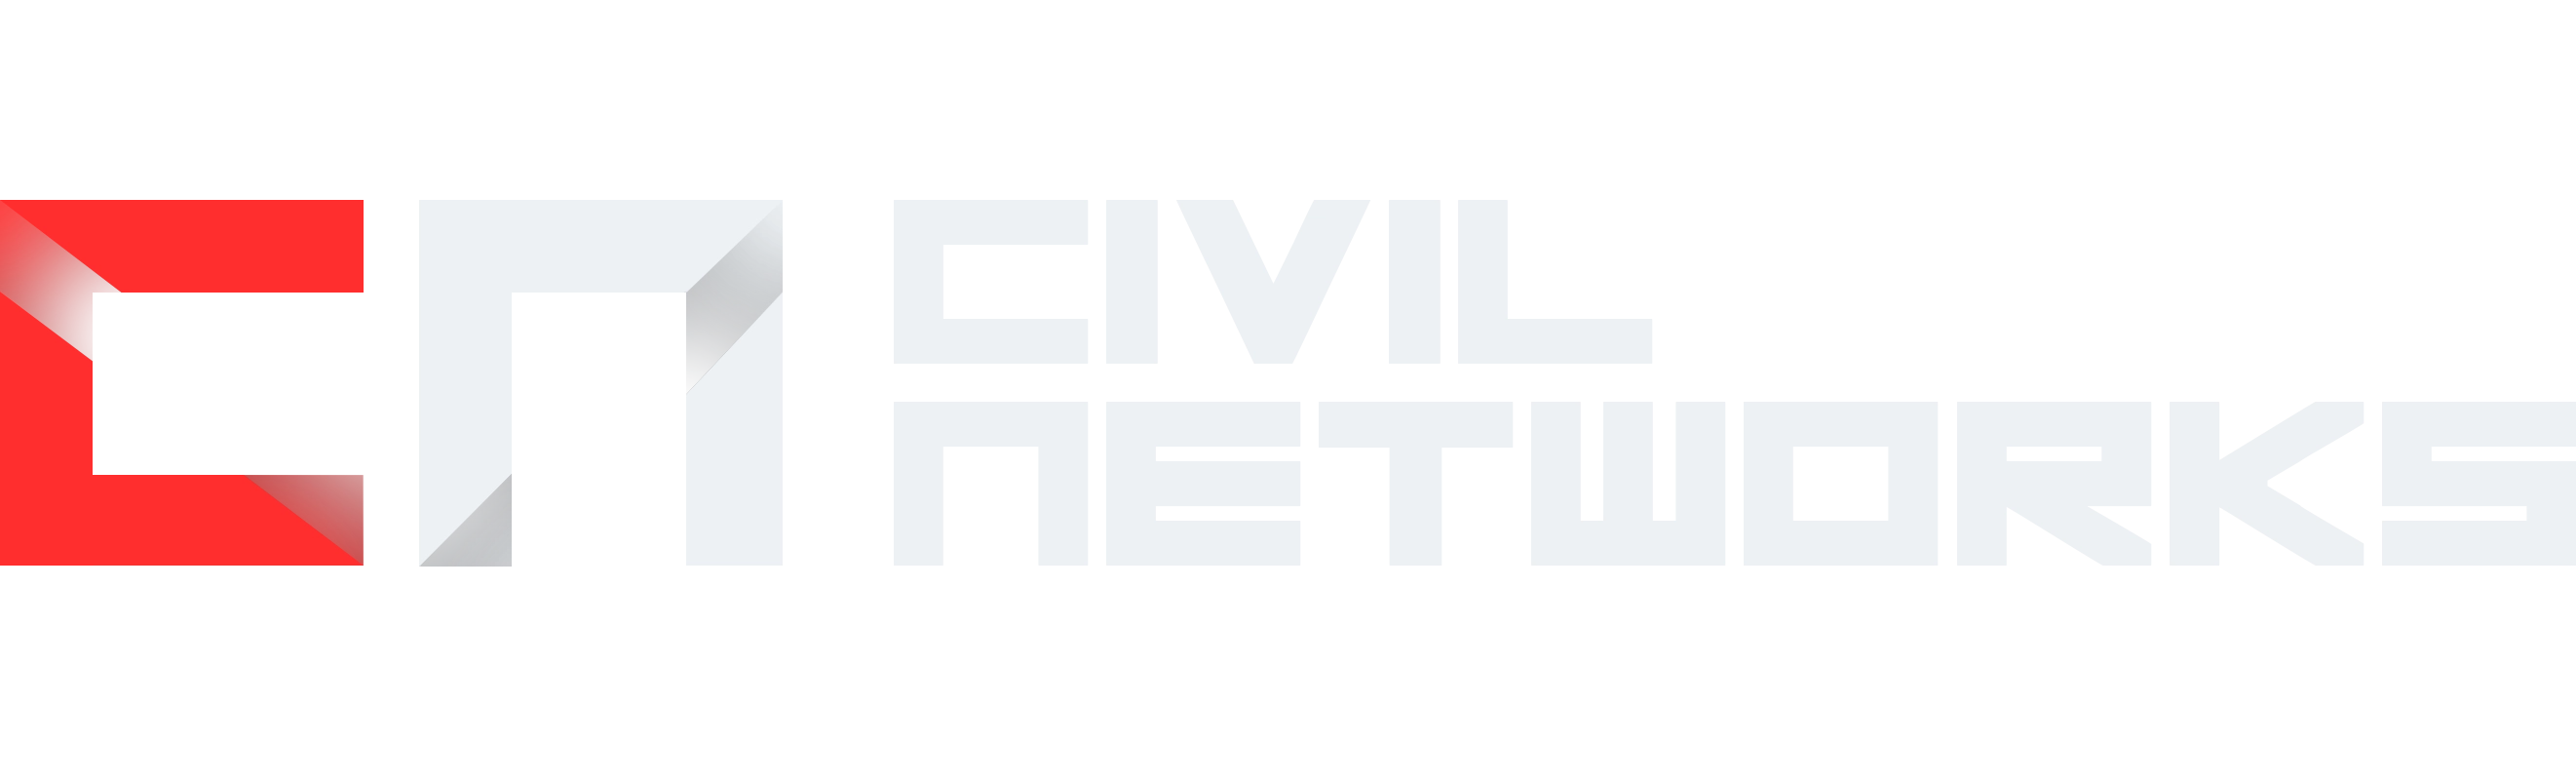 Civil Networks Logo